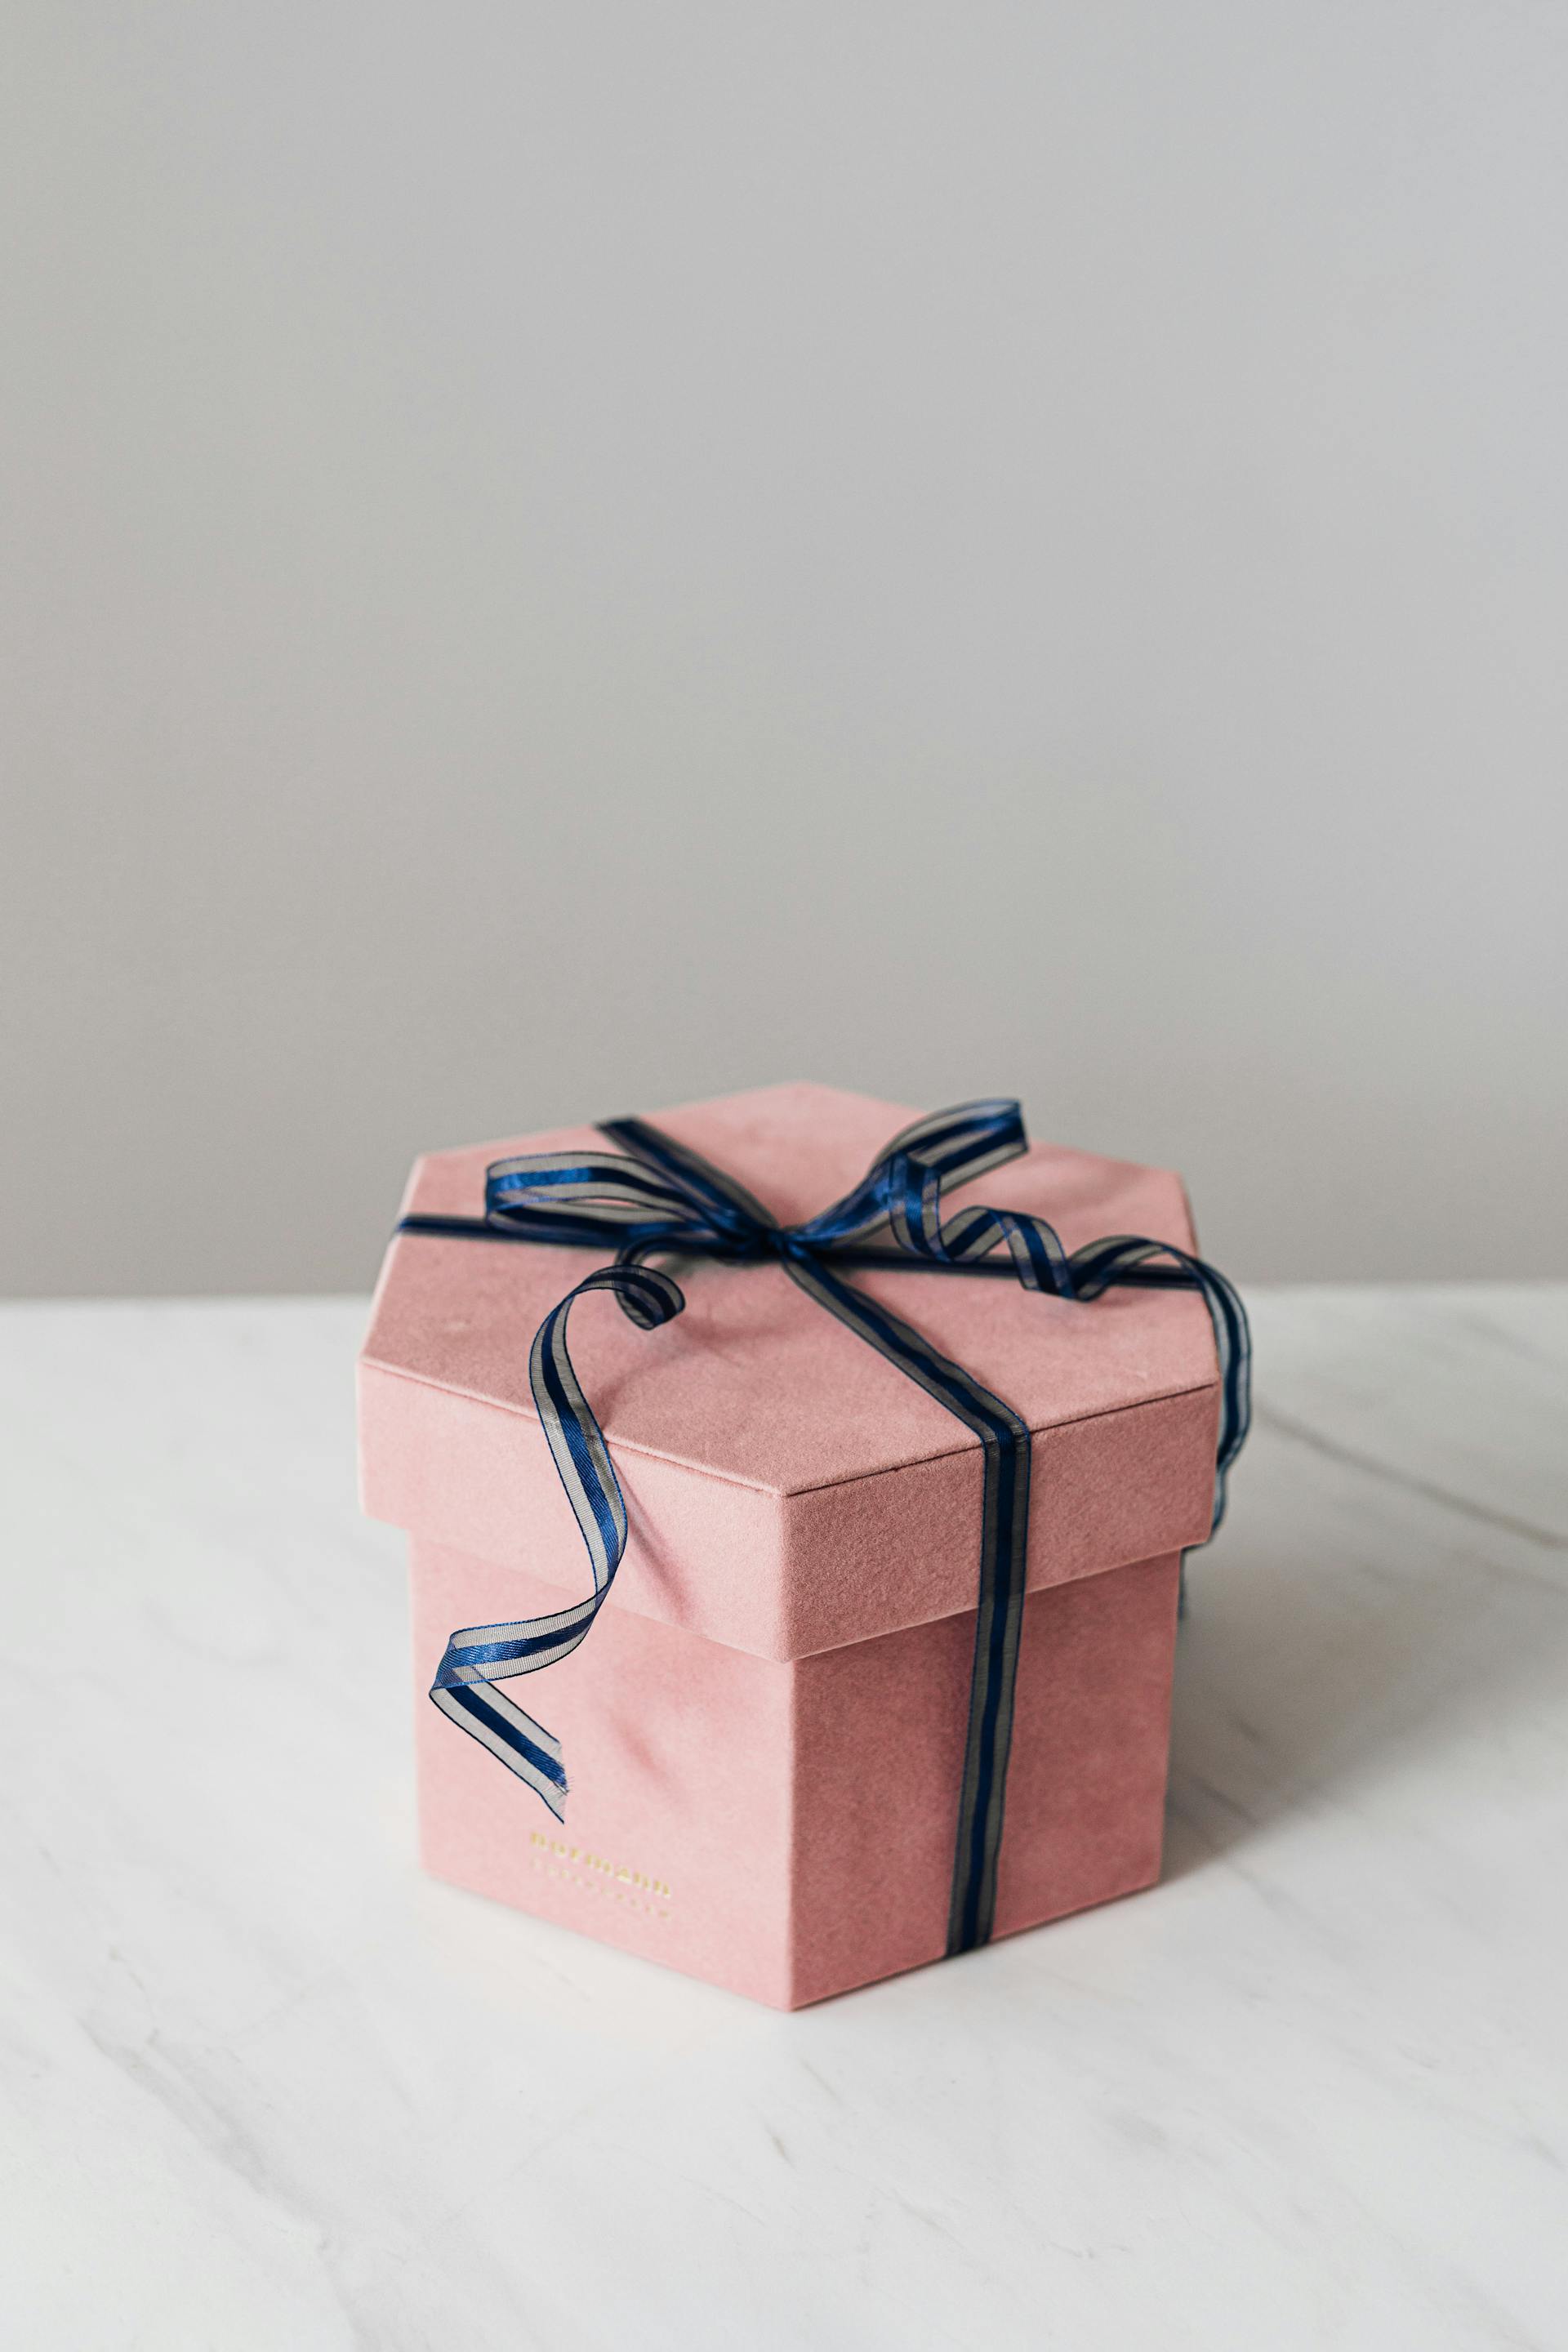 A gift box | Source: Pexels